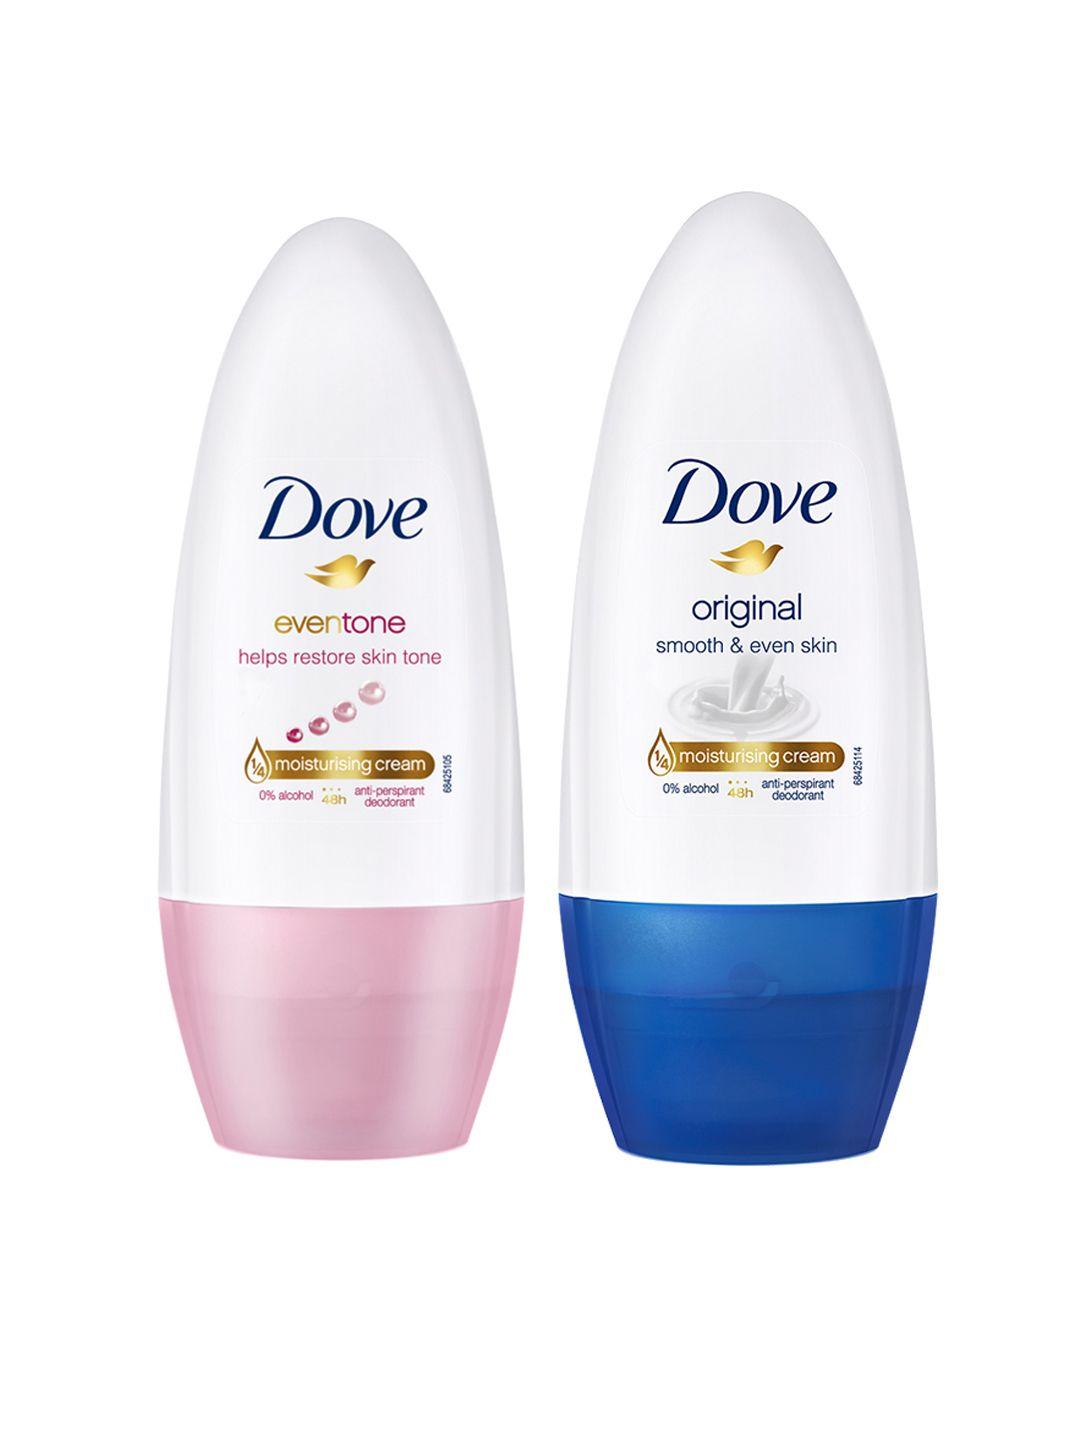 dove women set of 2 antiperspirant roll-on deodorant 50ml each - original & eventone